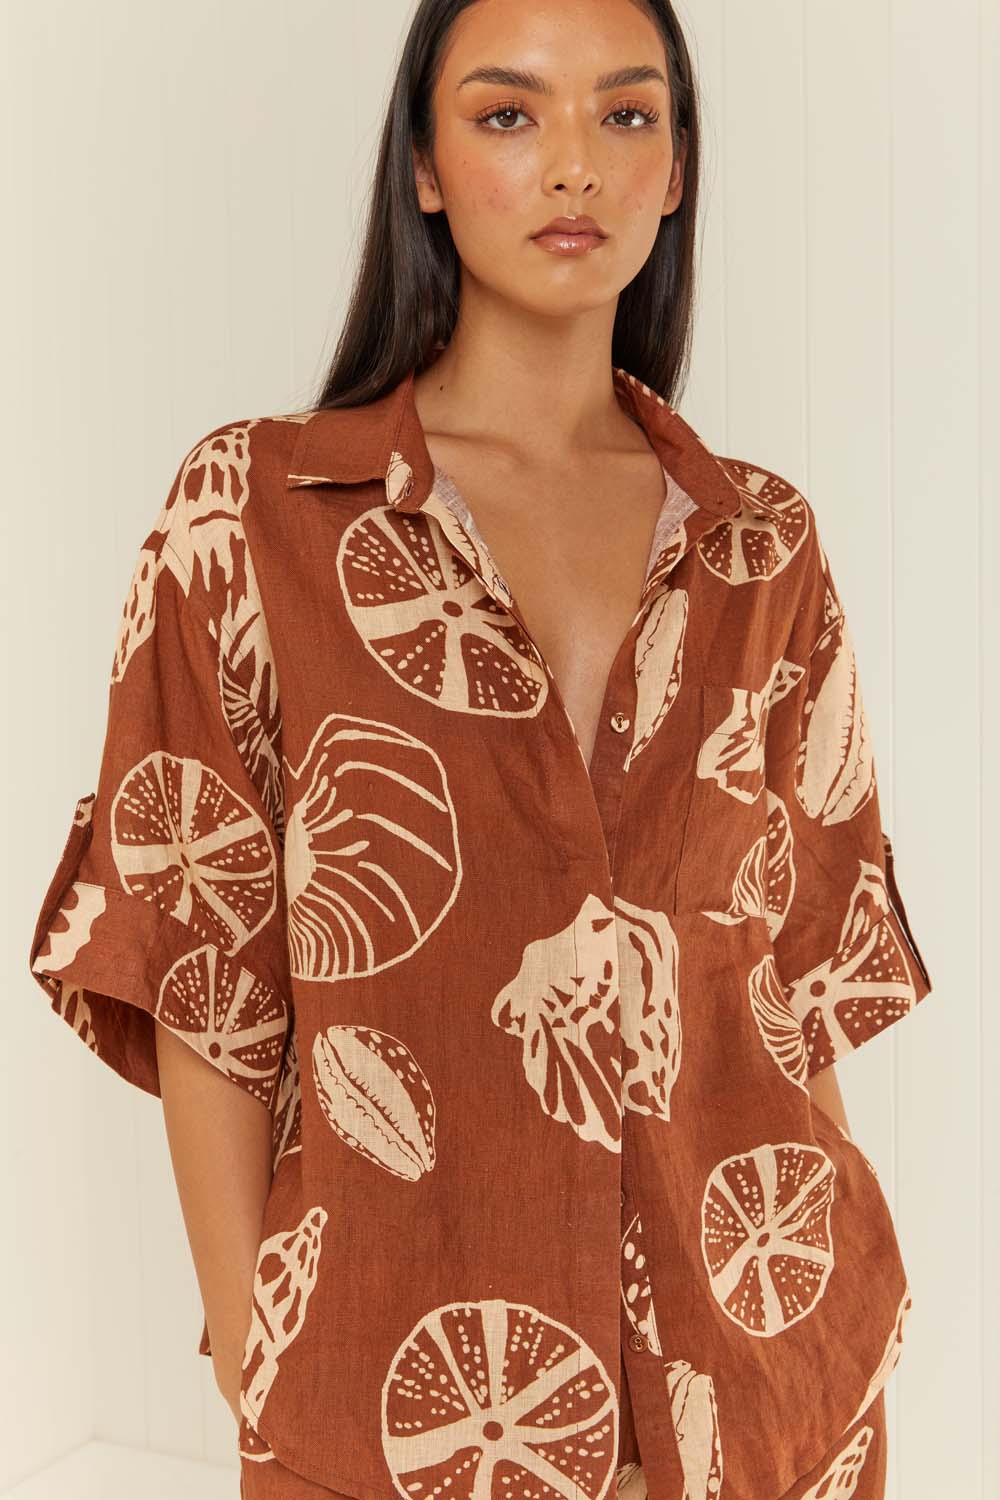 Palm Noosa Mirage Shirt Brown Shells